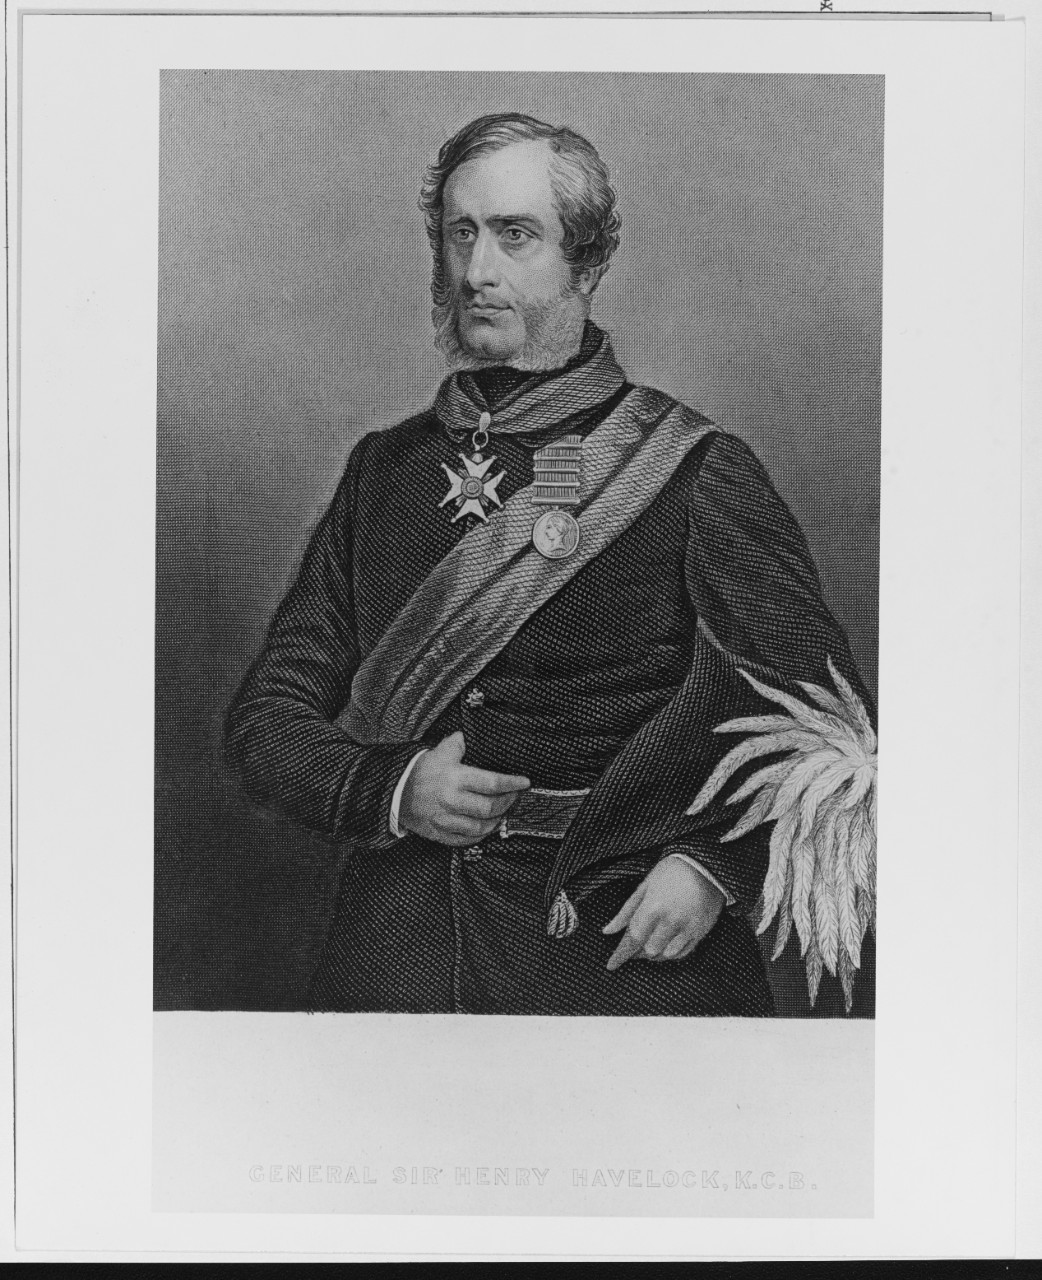 British General -Sir- Henry Havelock, KCB